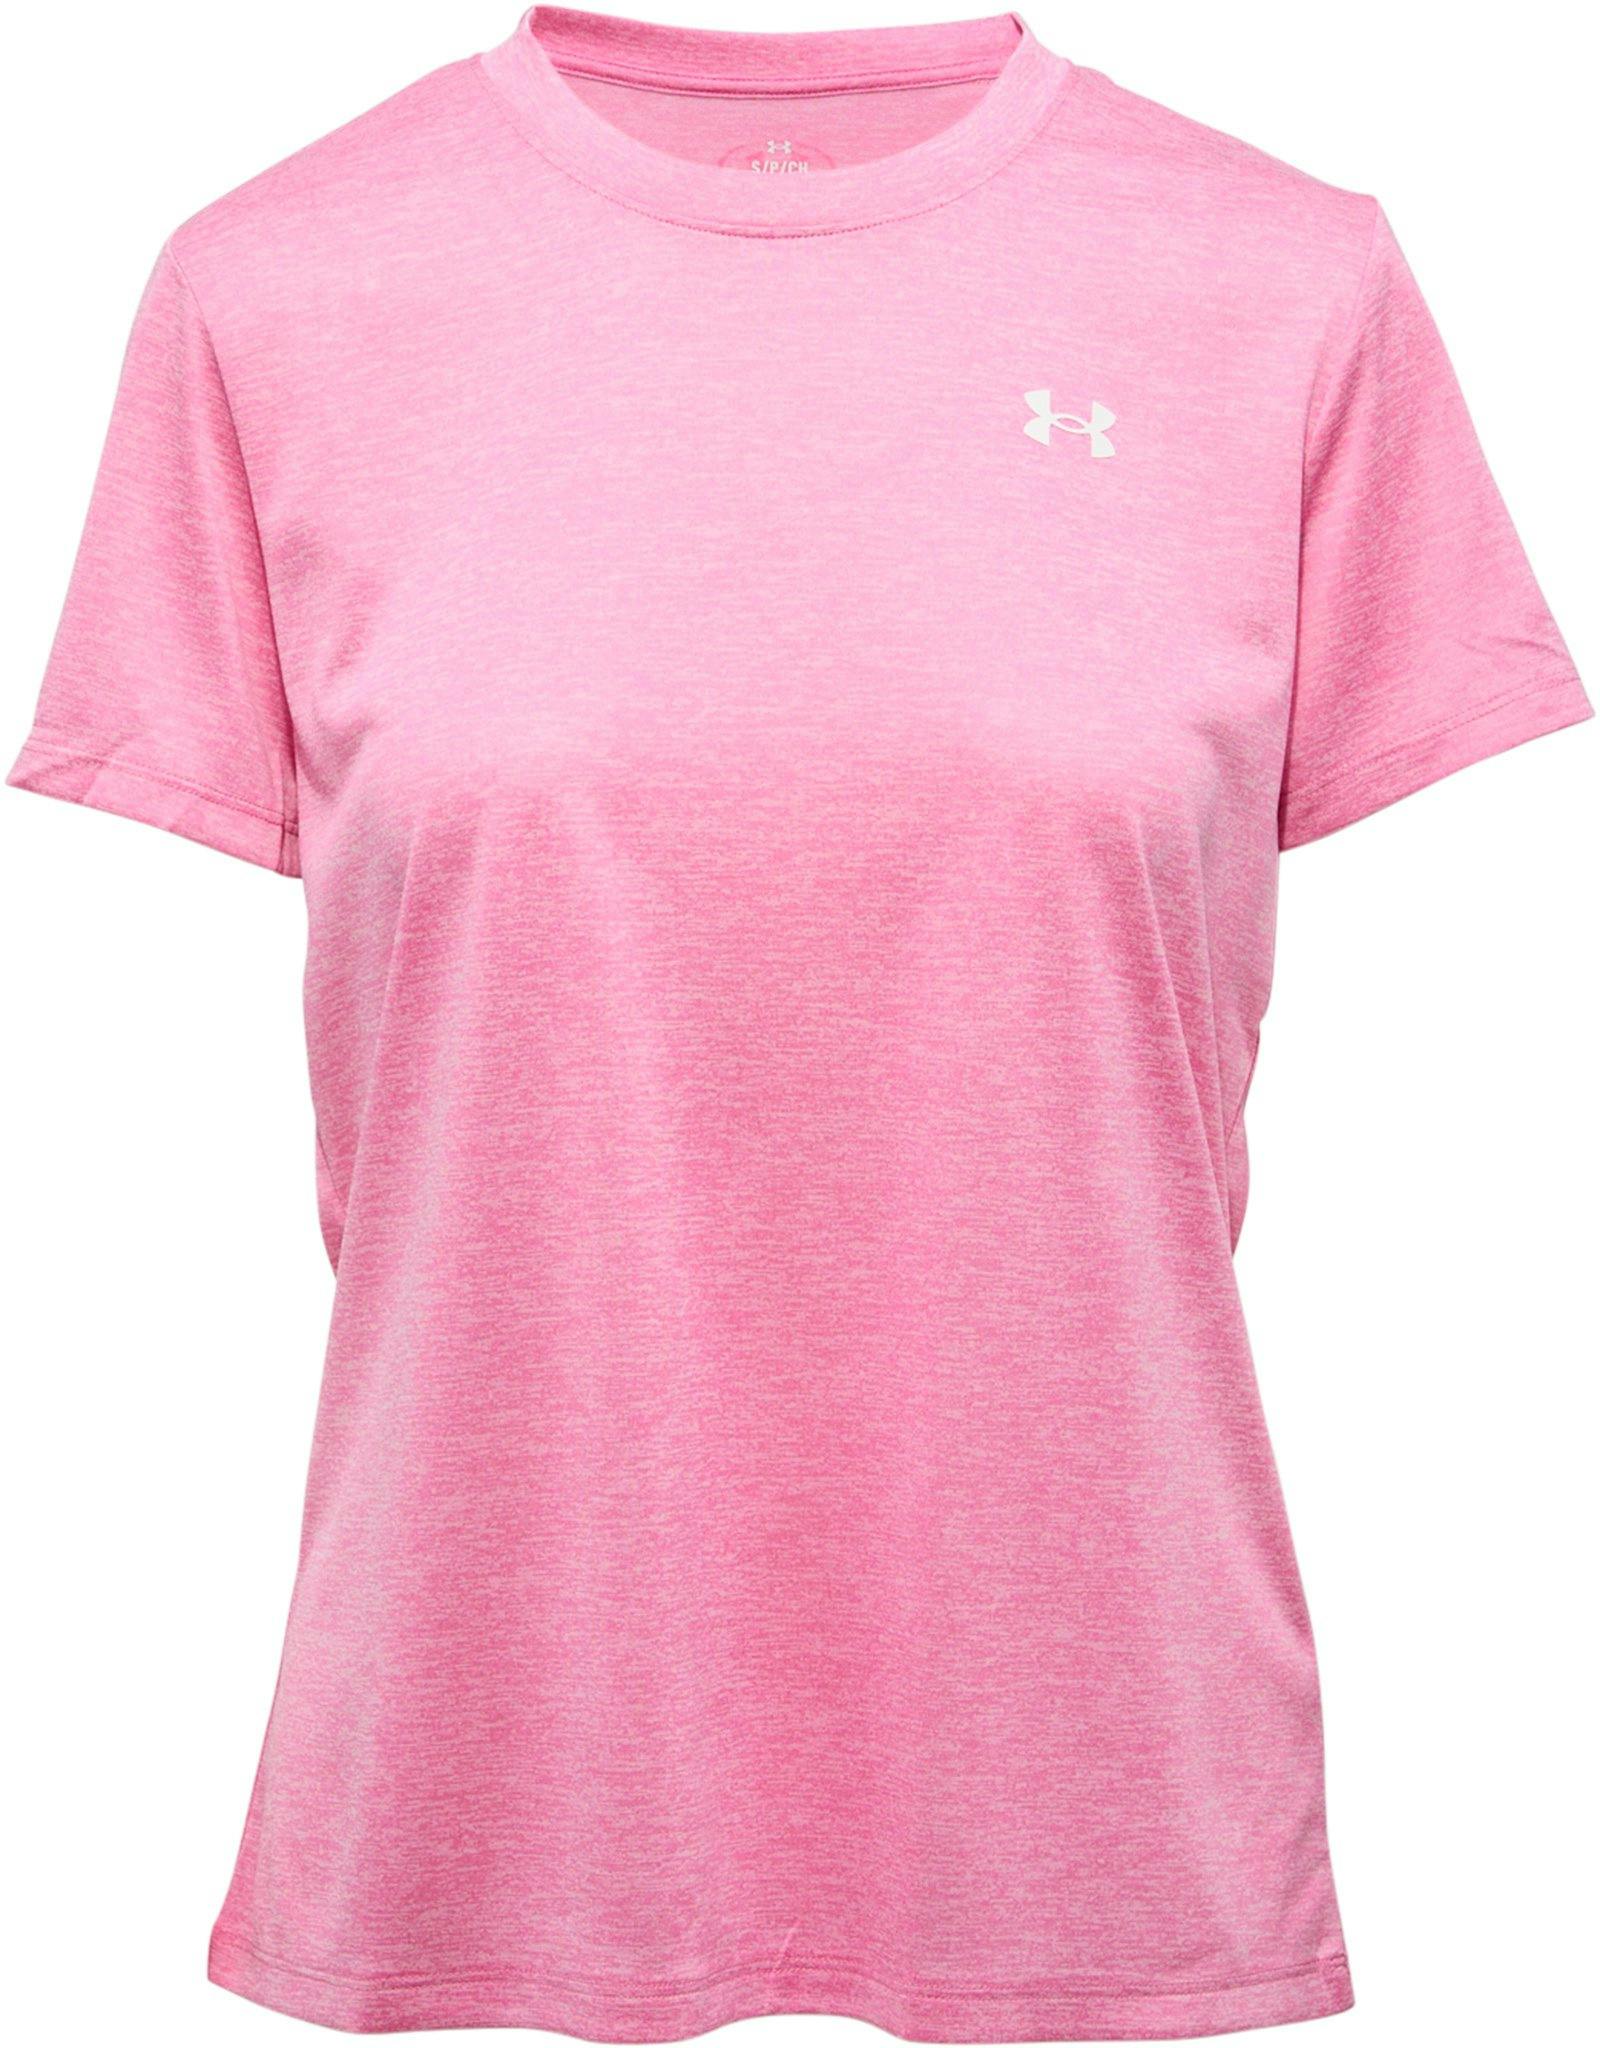 Product image for UA Tech Twist Short Sleeve T-Shirt - Women's